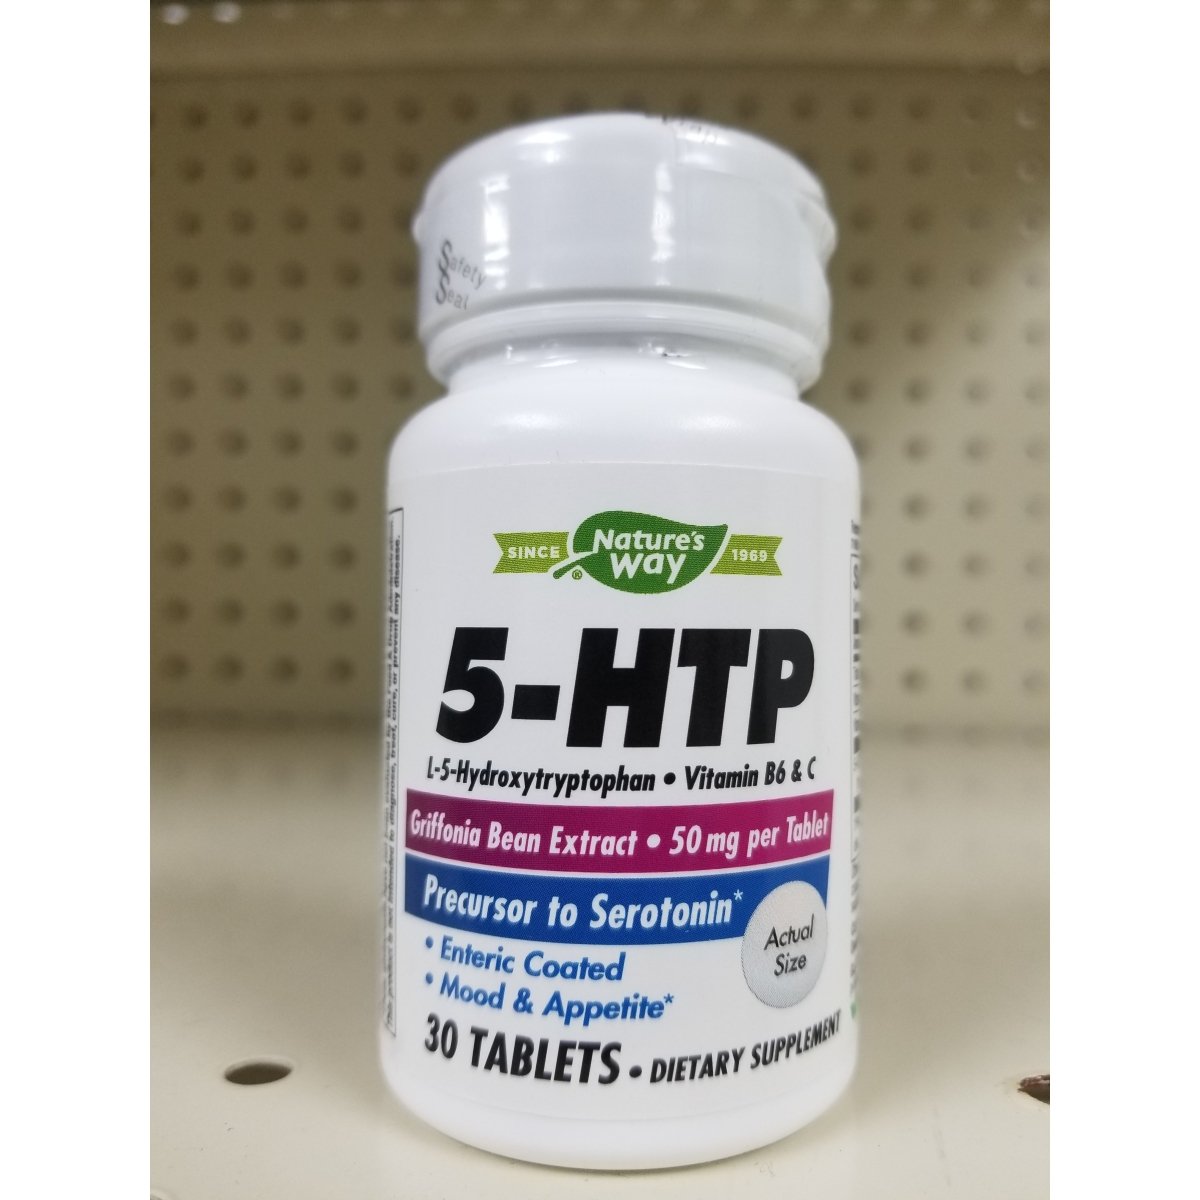 5-HTP L-5-Hydroxytryptophan Vitamin B6 + Vitamin C + Griffonia Bean Extract 30 Count